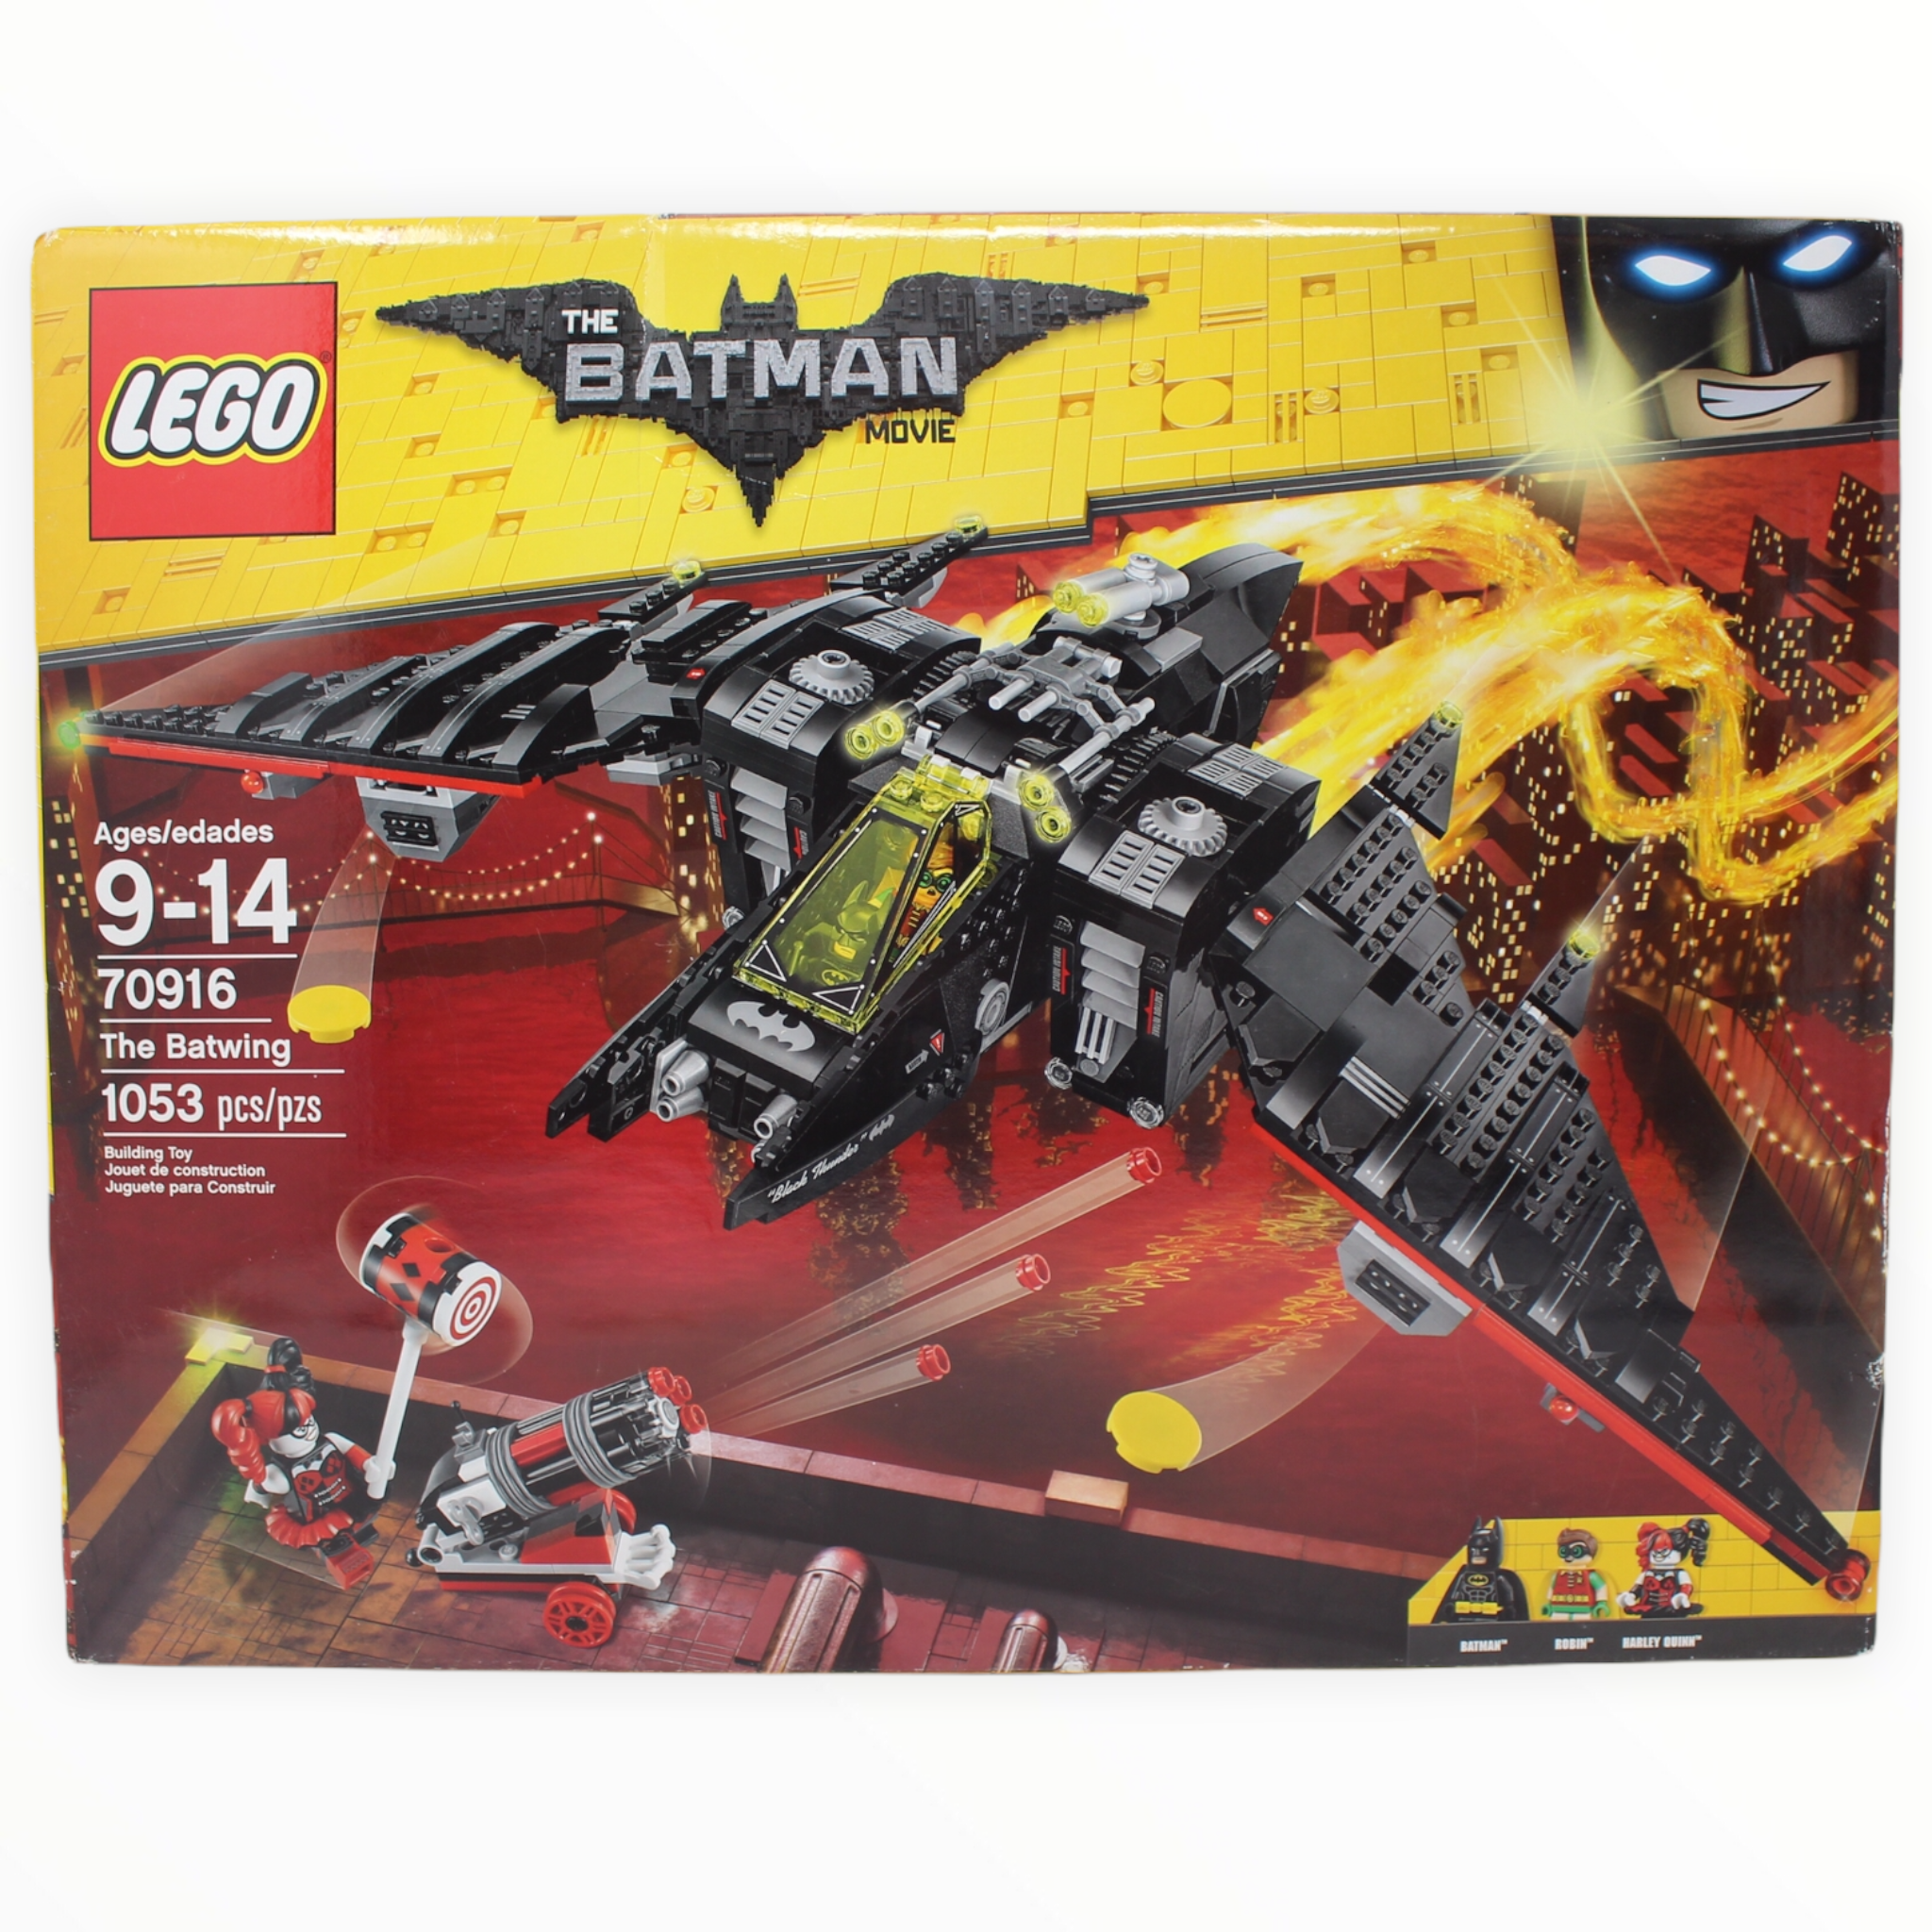 Retired Set 70916 The LEGO Batman Movie The Batwing